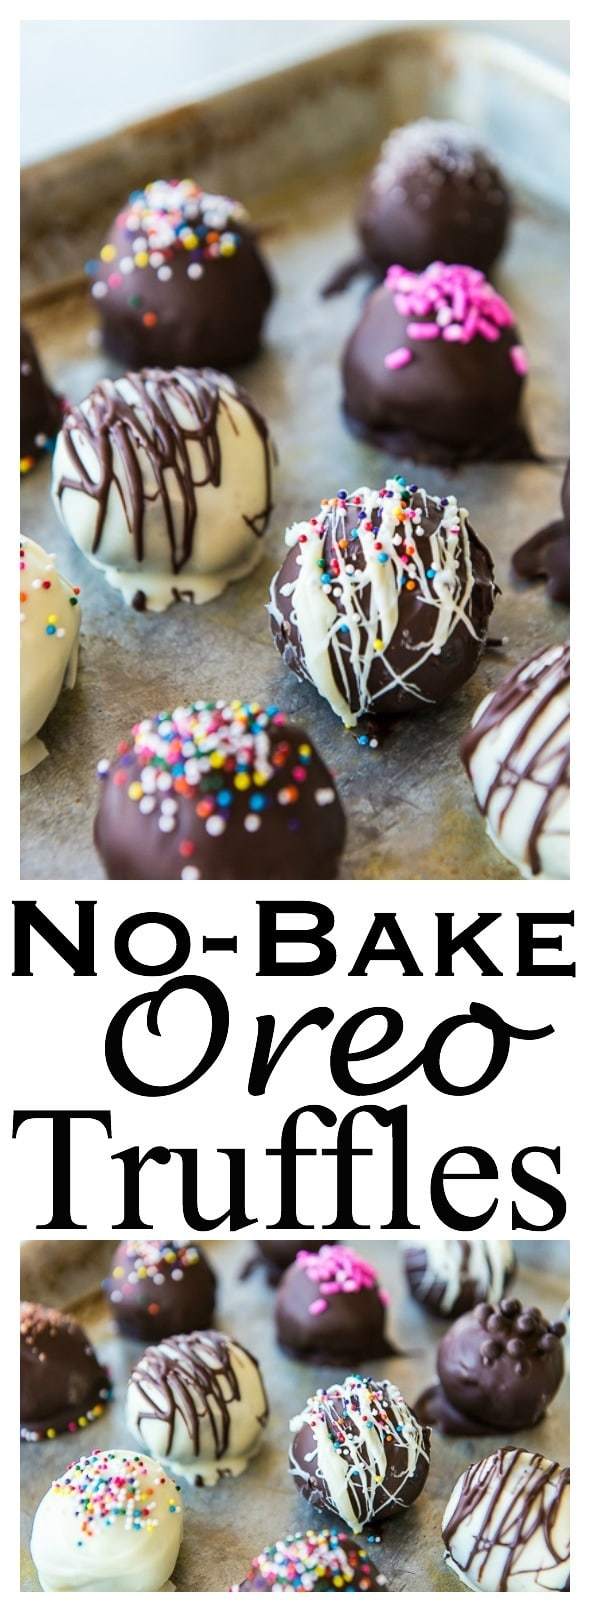 Oreo Truffles - One of the Best Easy Dessert Recipes - No Baking!